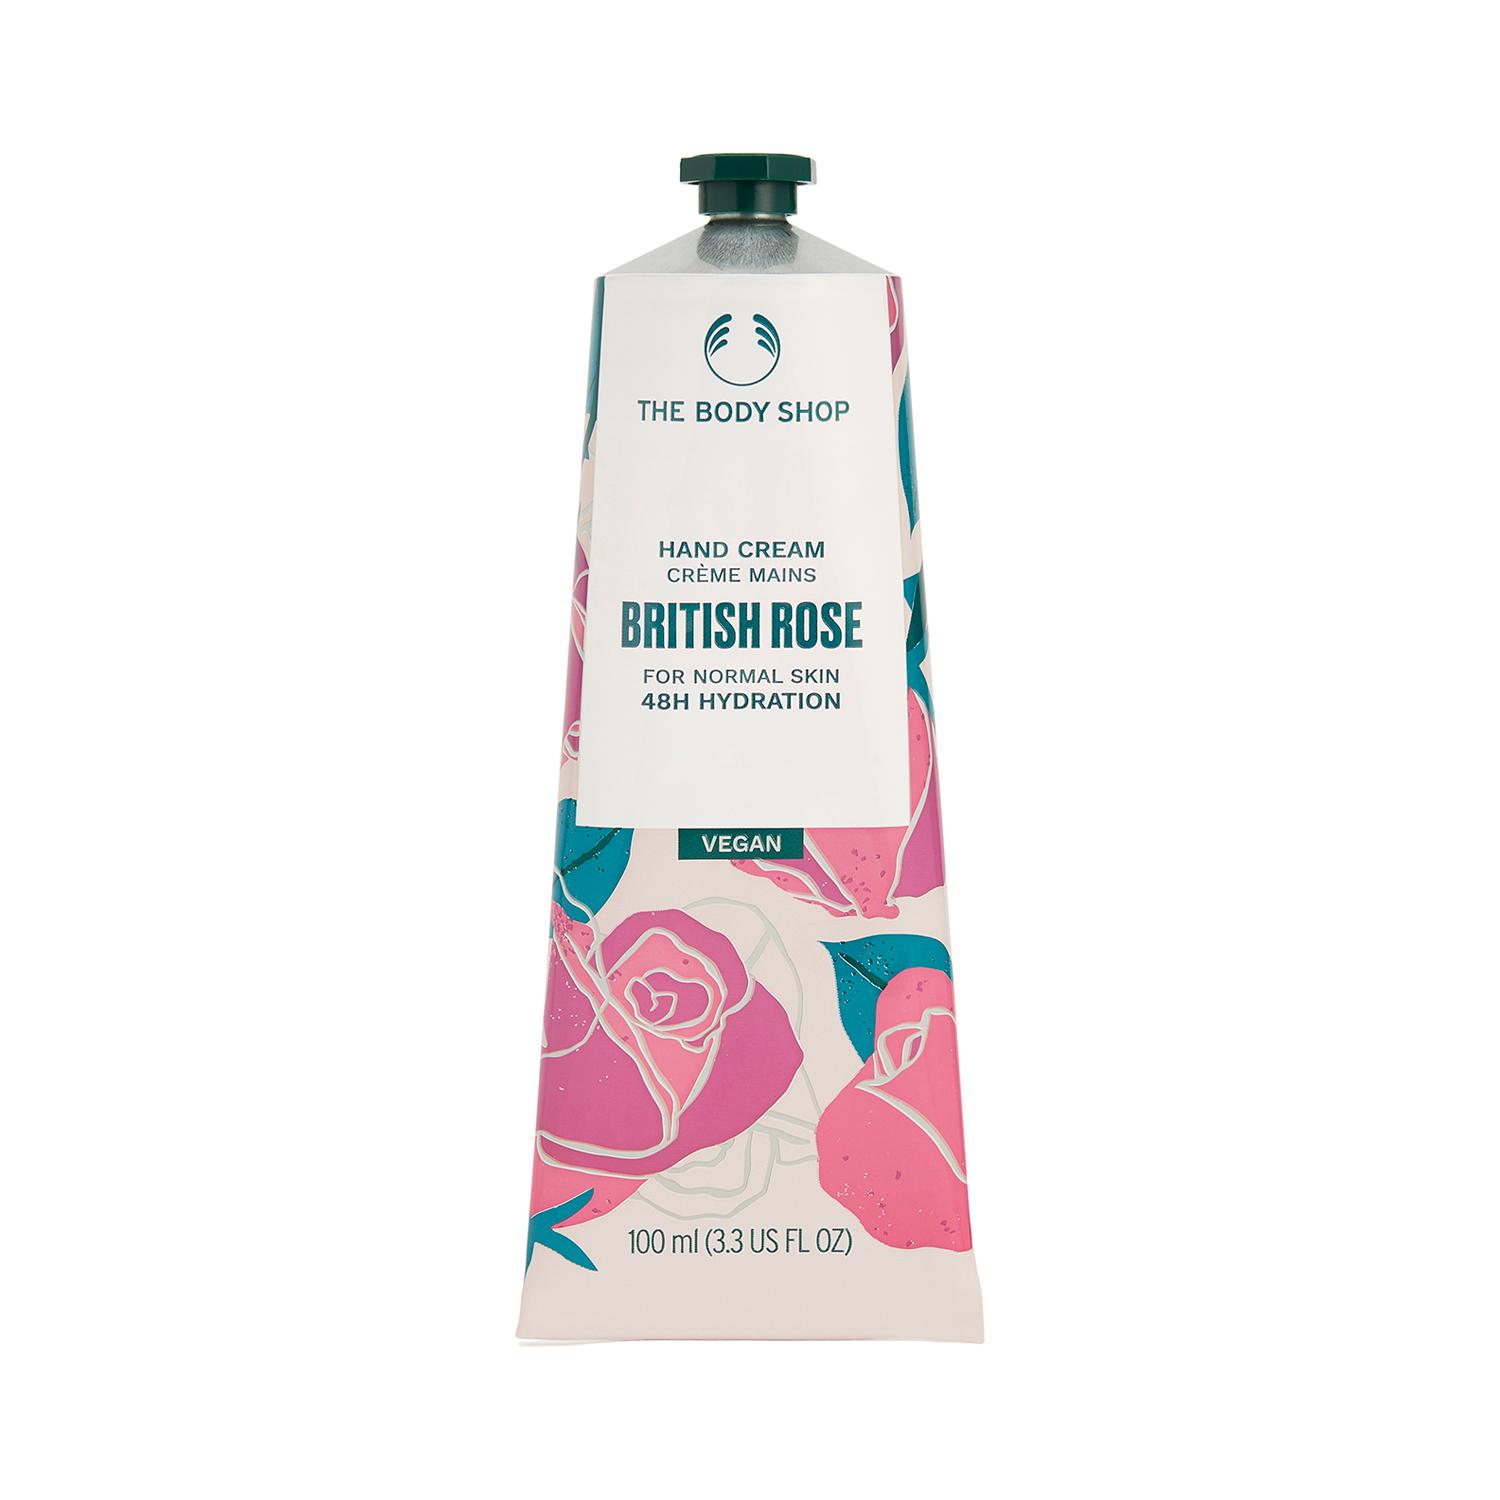 The Body Shop | The Body Shop British Rose Hand Cream (100ml)